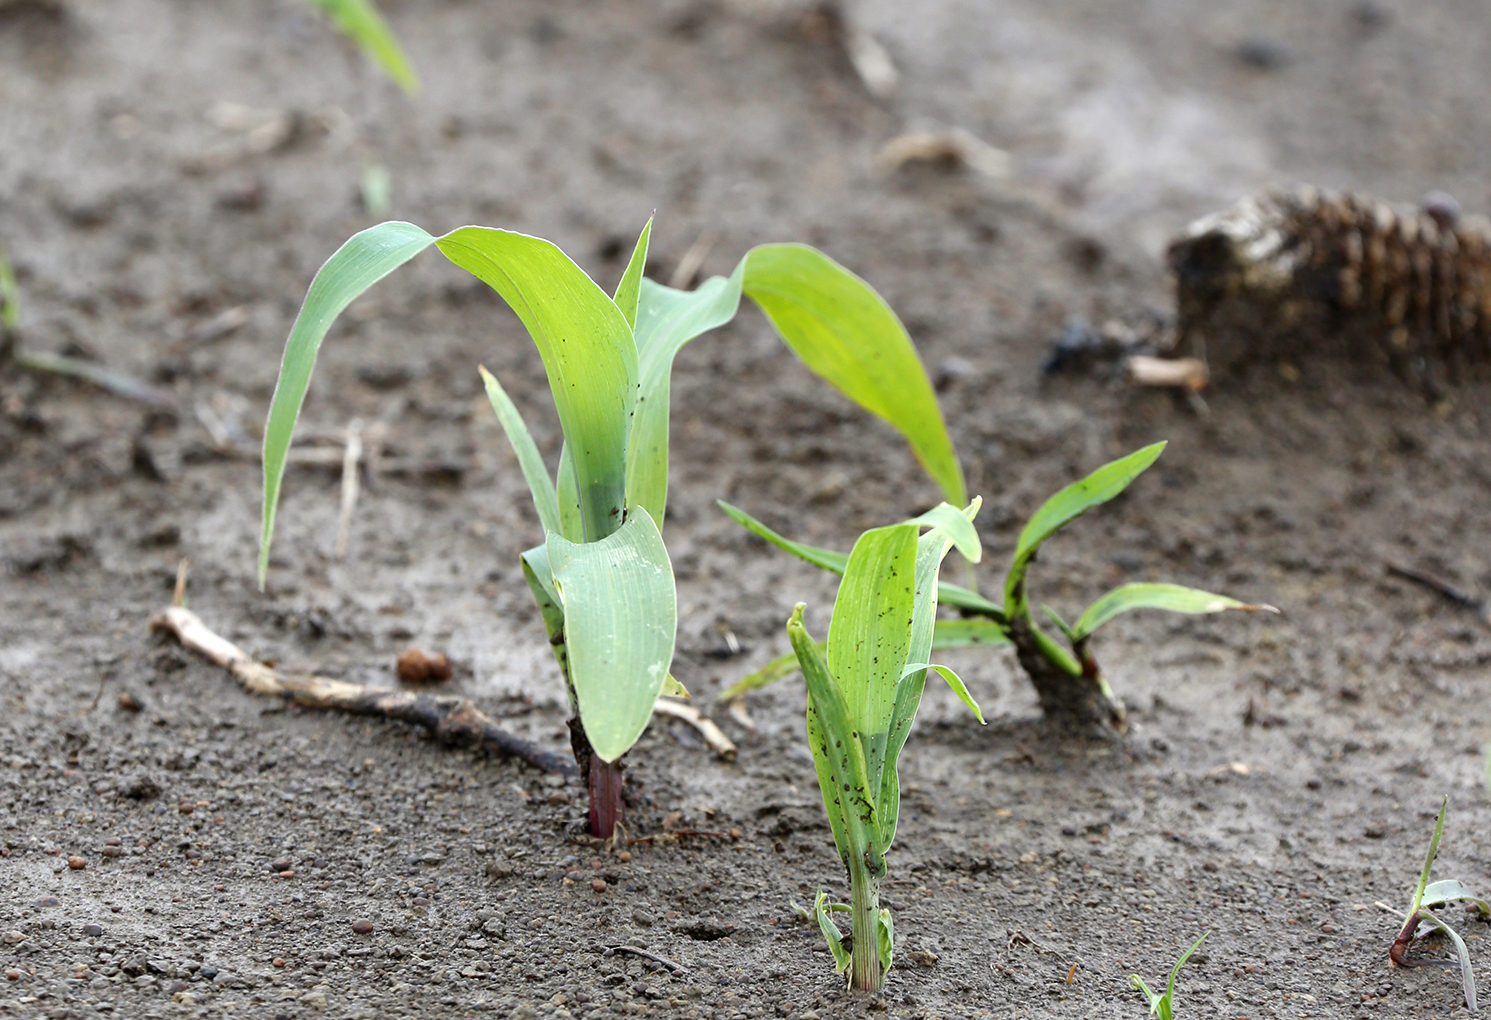 In the Corn Field: Water and Nitrogen Loss